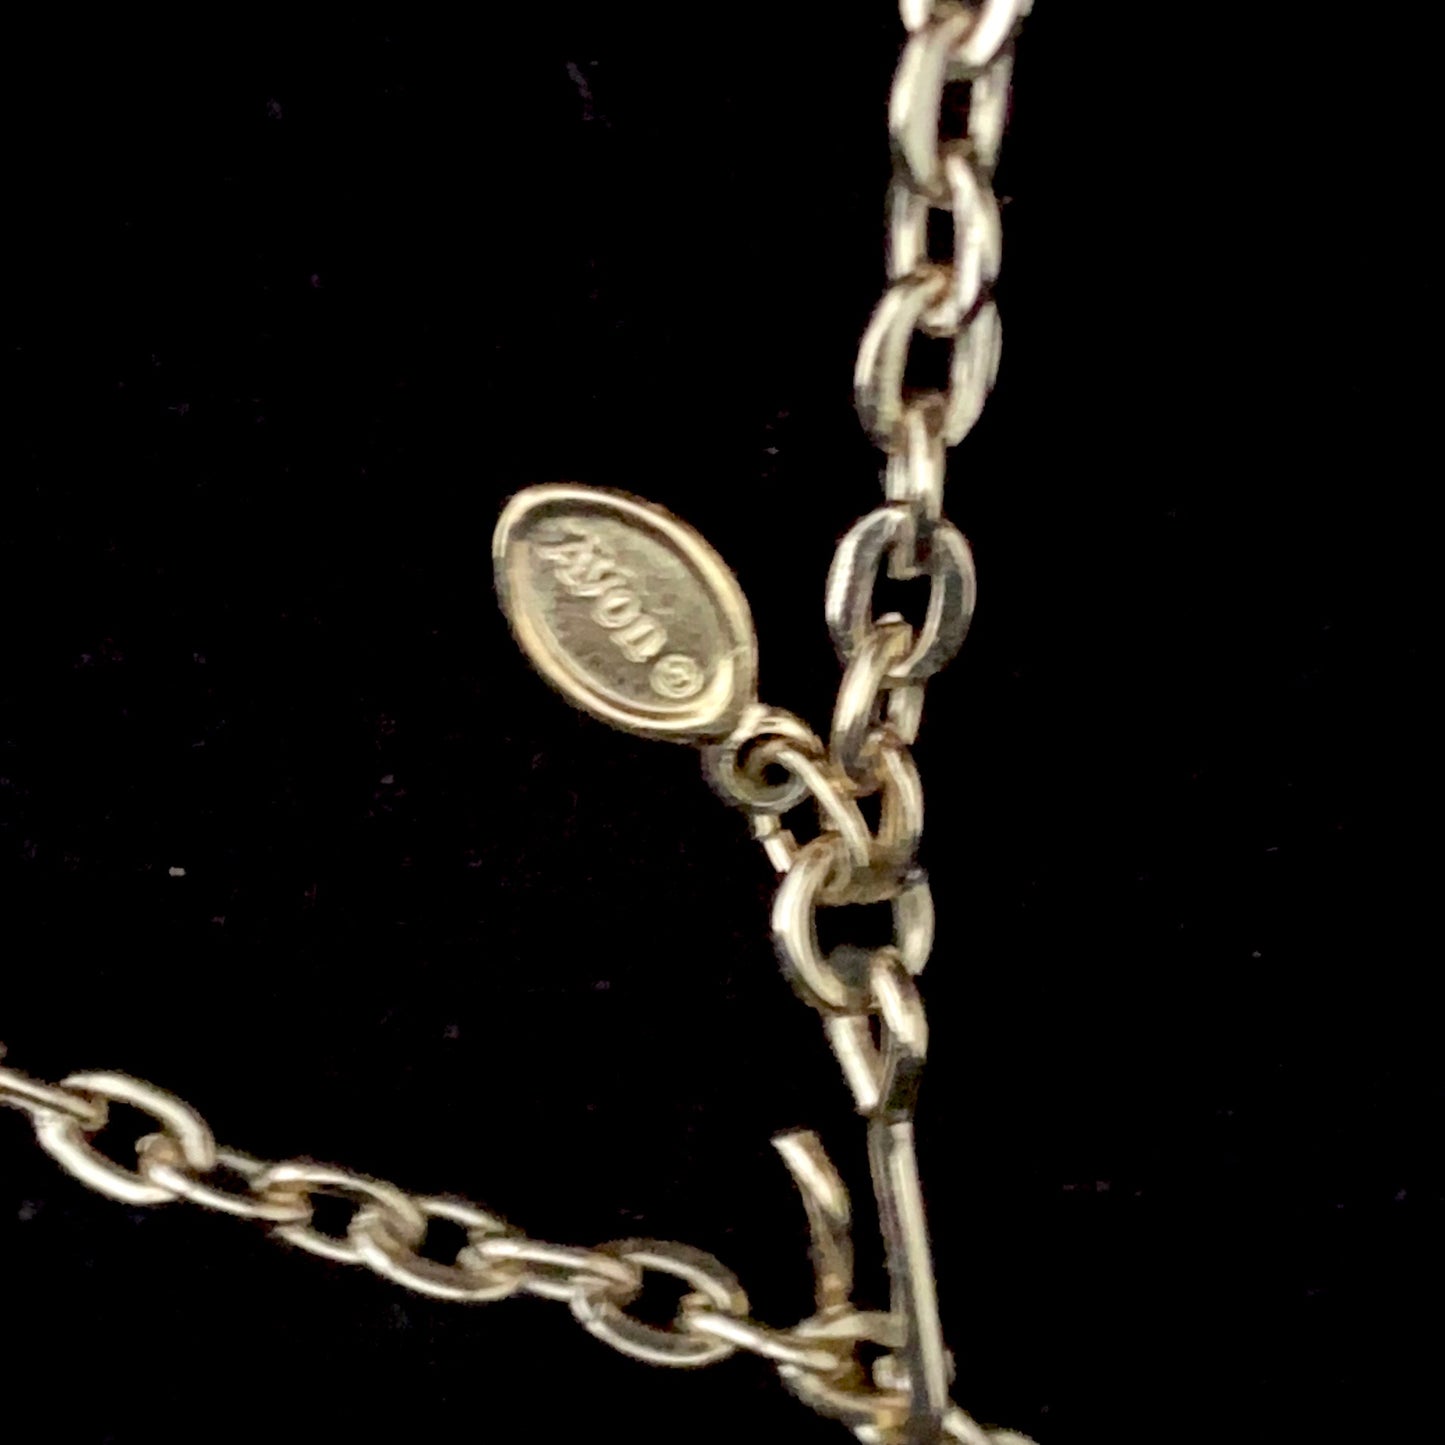 1975 Avon Moonspun Pendant Necklace